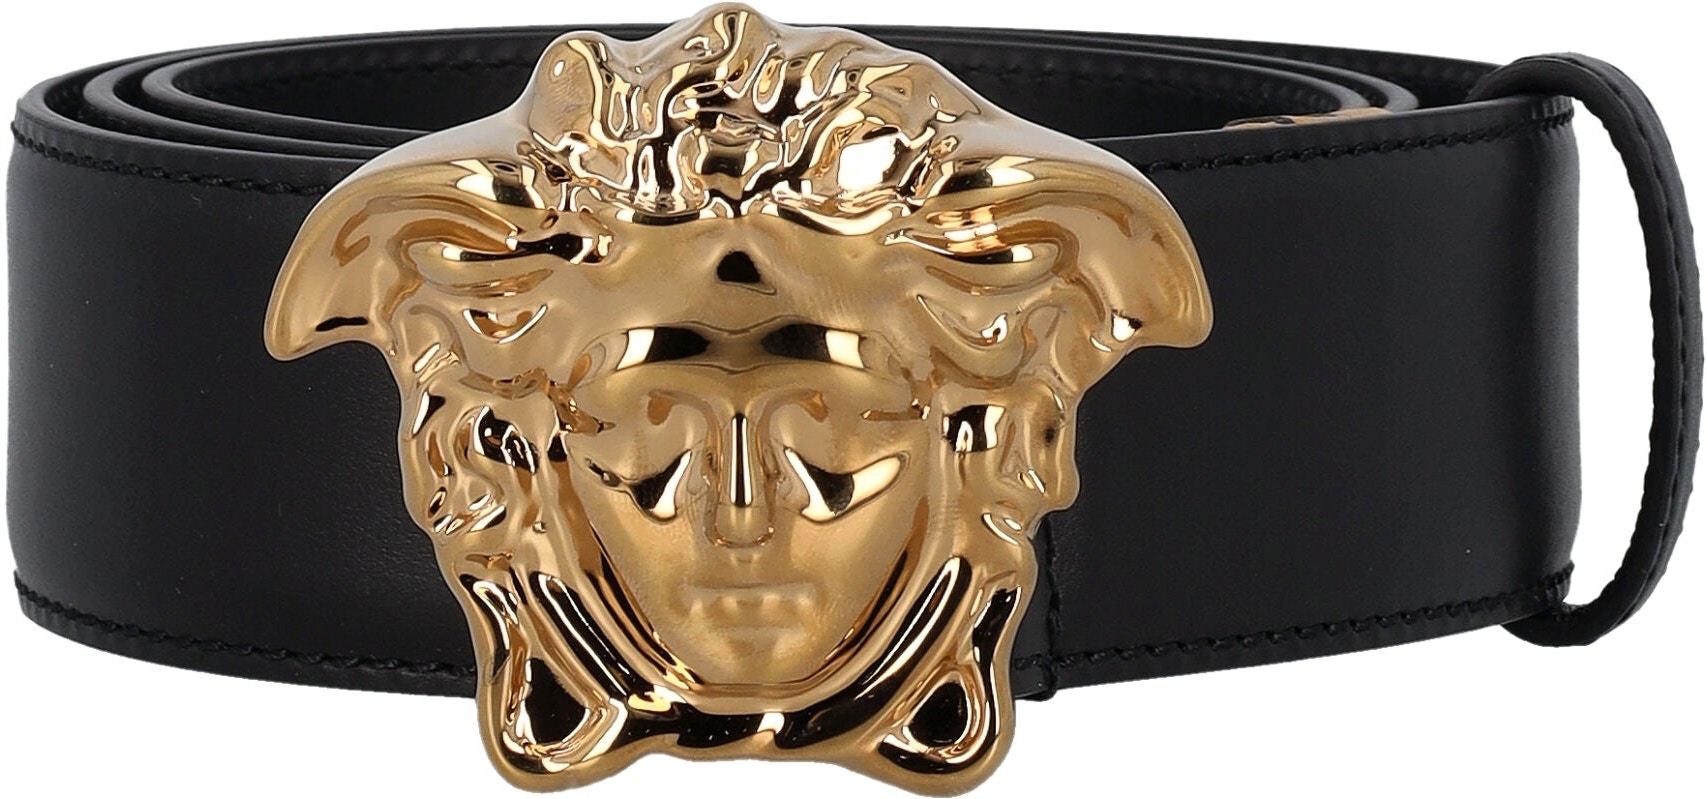 Authentic Versace La Medusa Black Solid Leather Belt on sale at